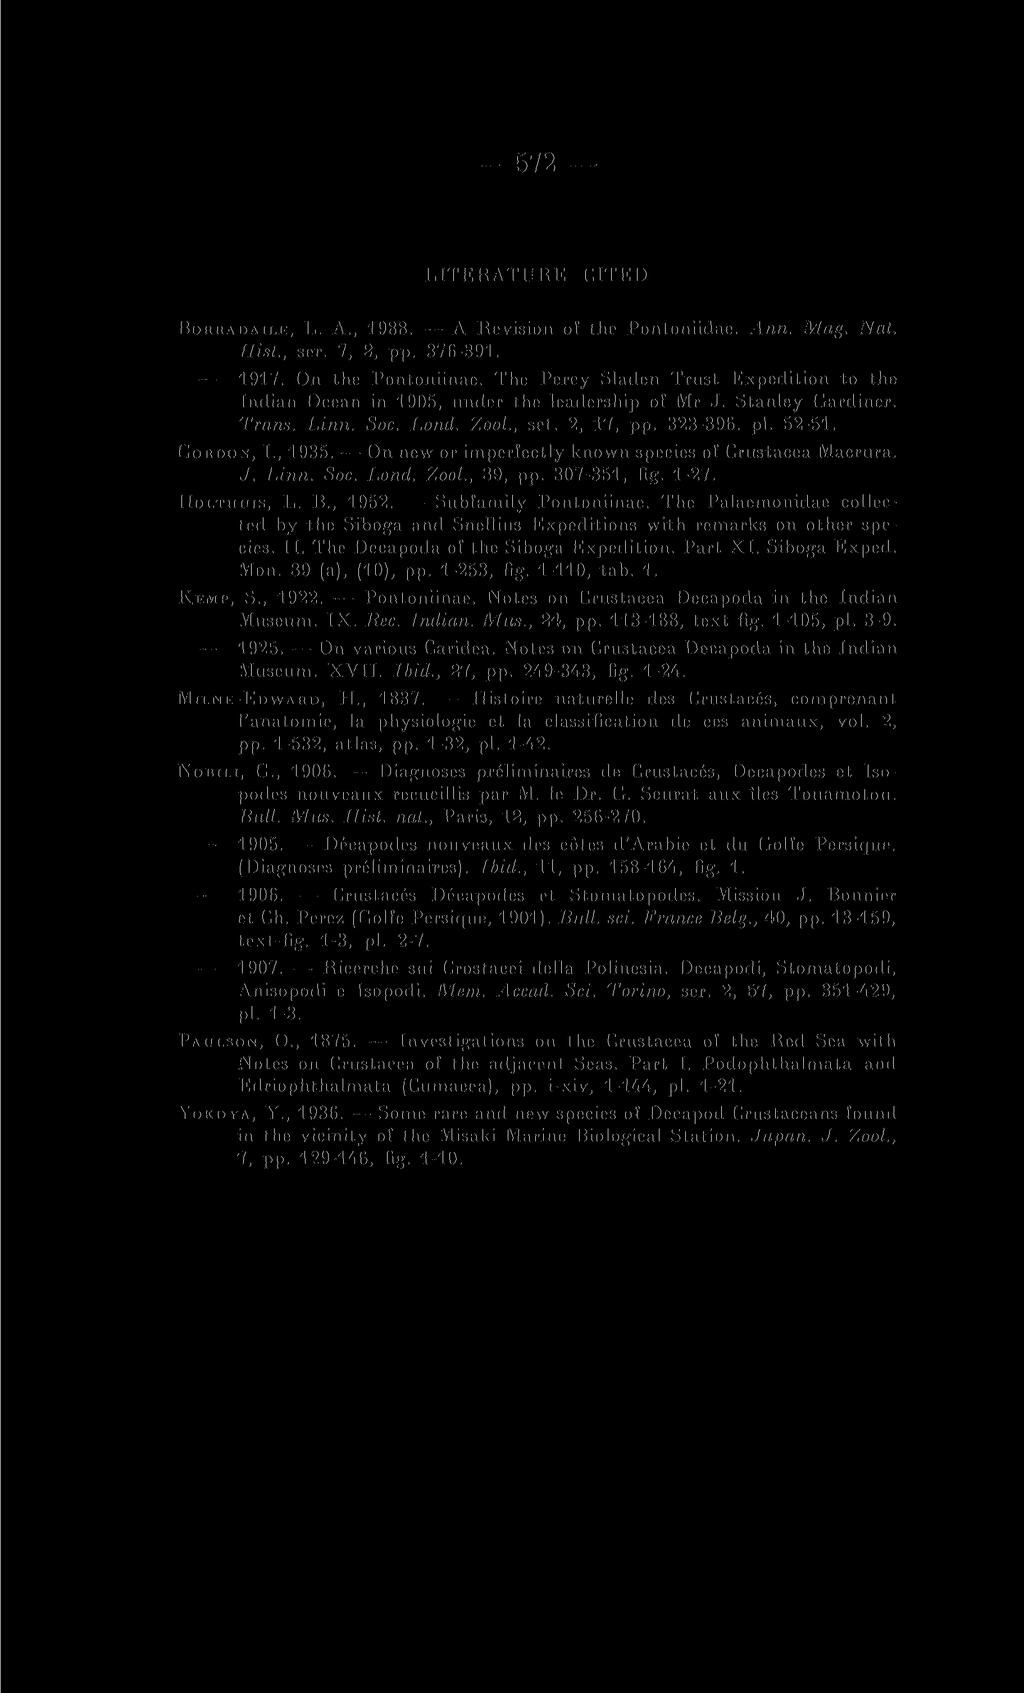 LITERATI; RE CITED BORRAOAII.E, L. A., 1988. A Revision of ihe Pontoniidae. Ann. Mag. Nat. Hist., ser. 7, 2, pp. 376-391. 1917. On the Pontoniinae.